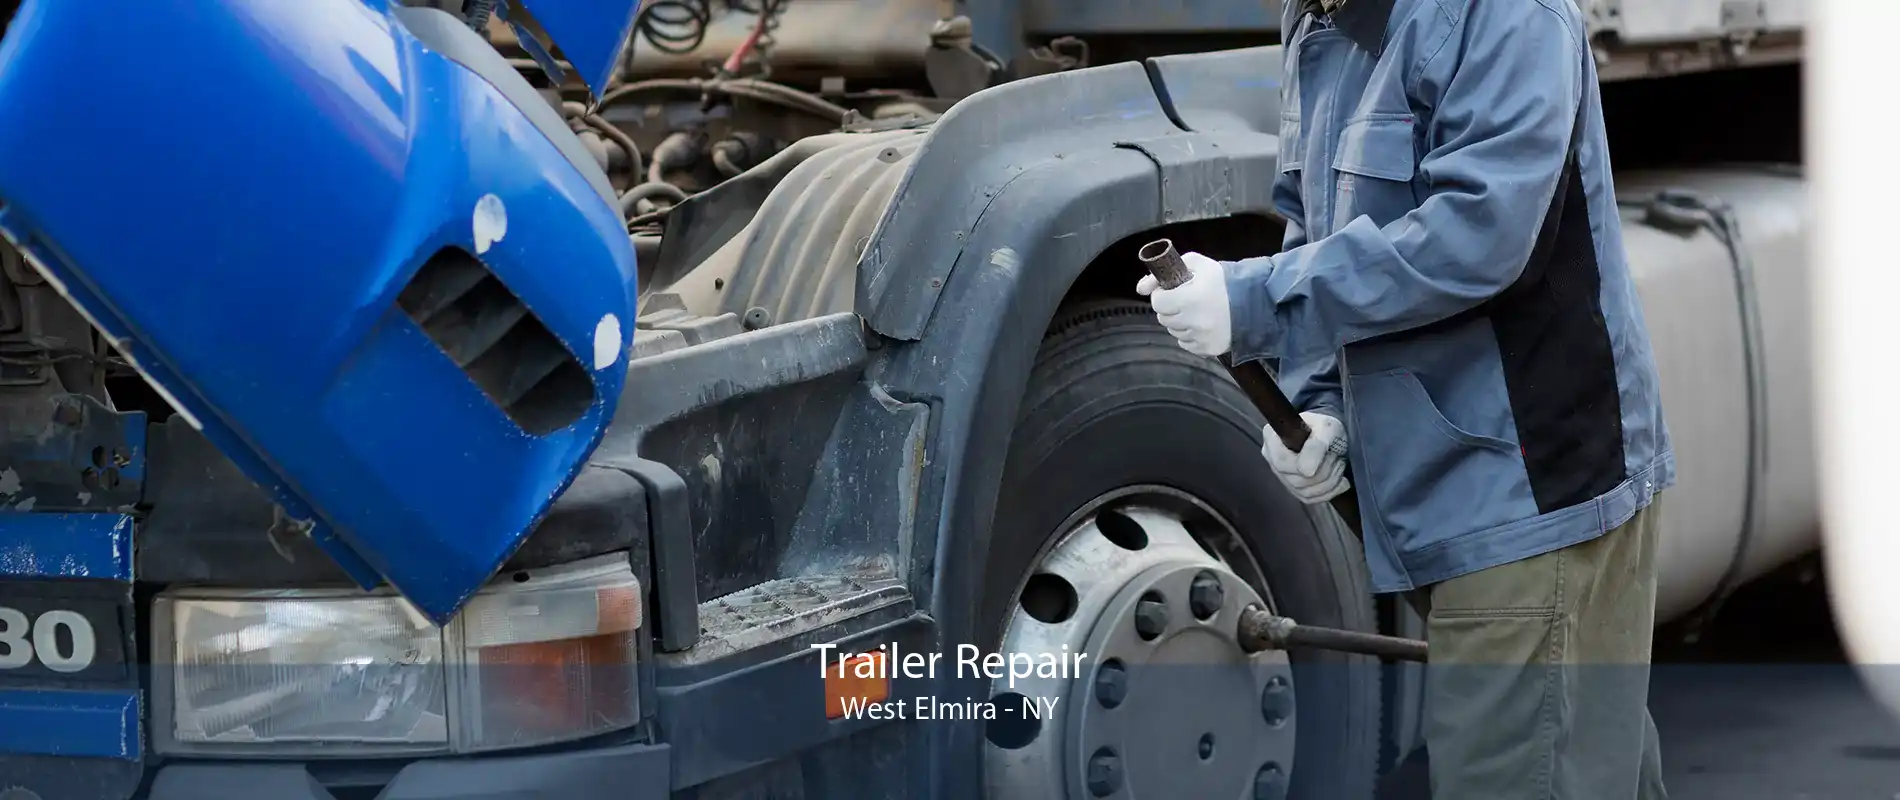 Trailer Repair West Elmira - NY